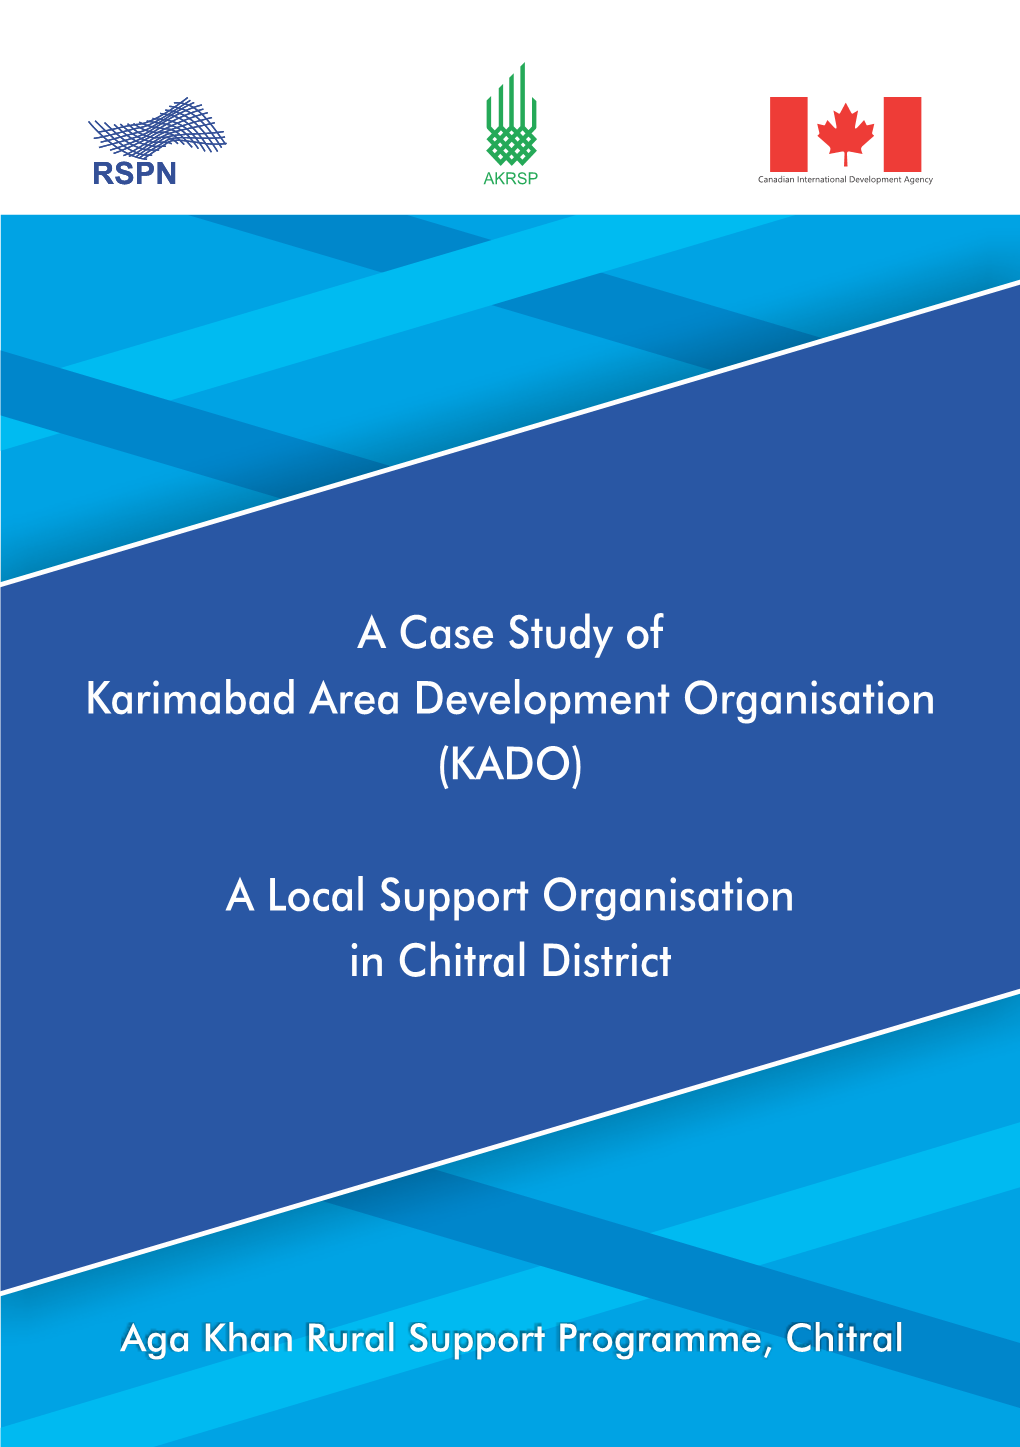 A Case Study of Karimabad Area Development Organisation (KADO)